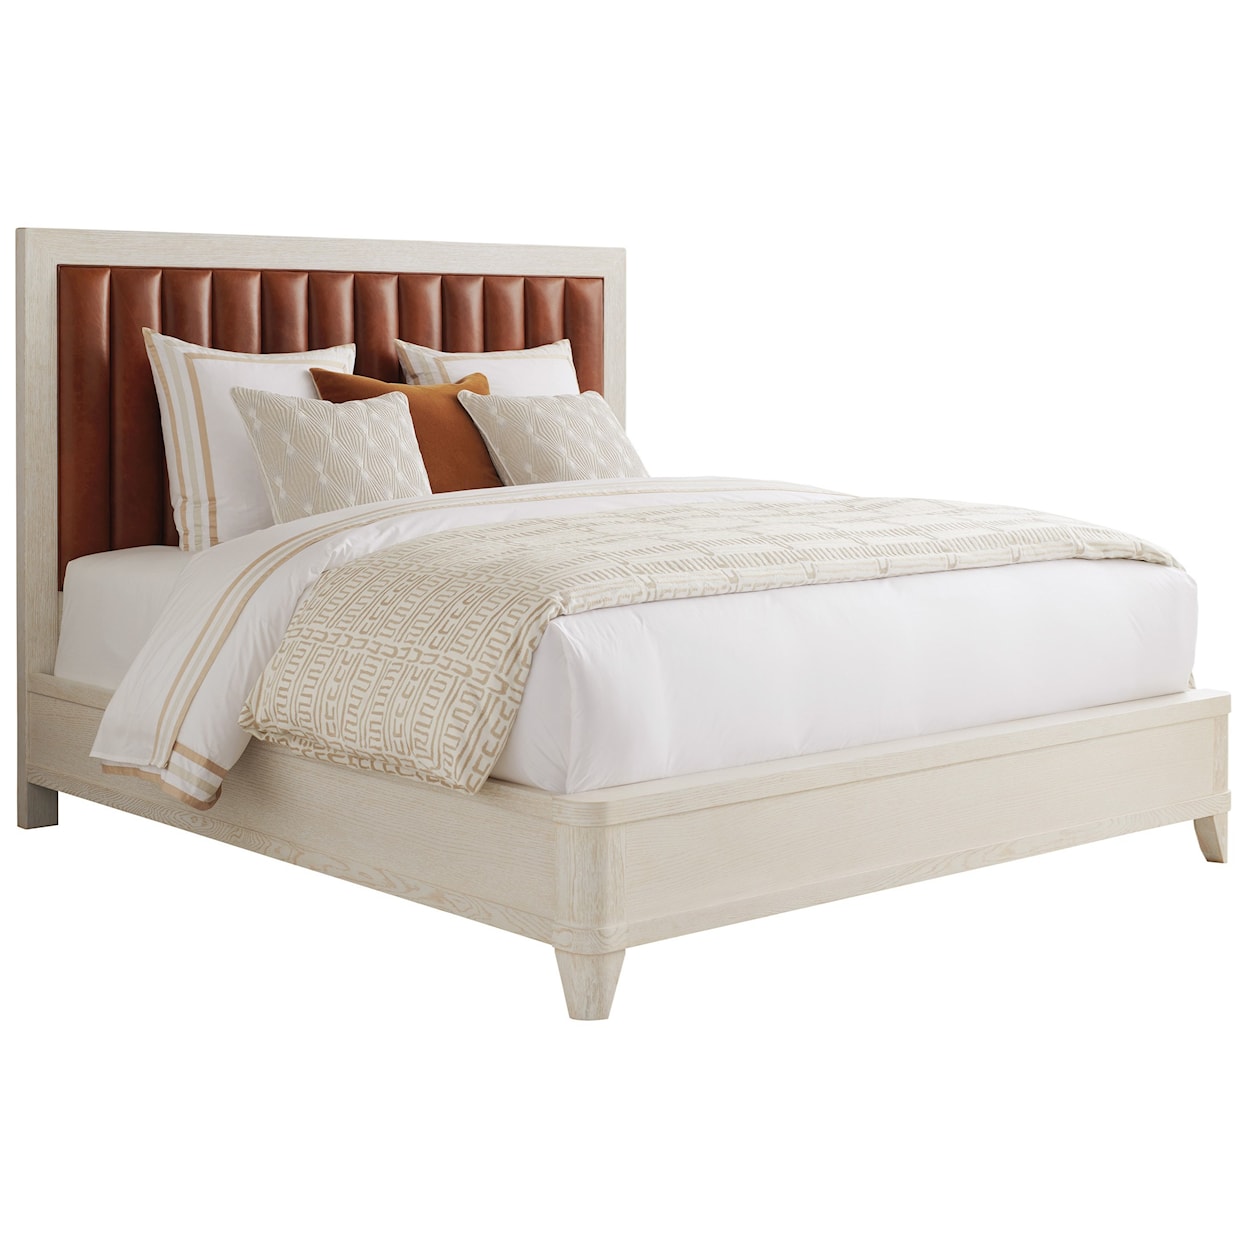 Barclay Butera Carmel Cambria Upholstered Bed 6/0 California King